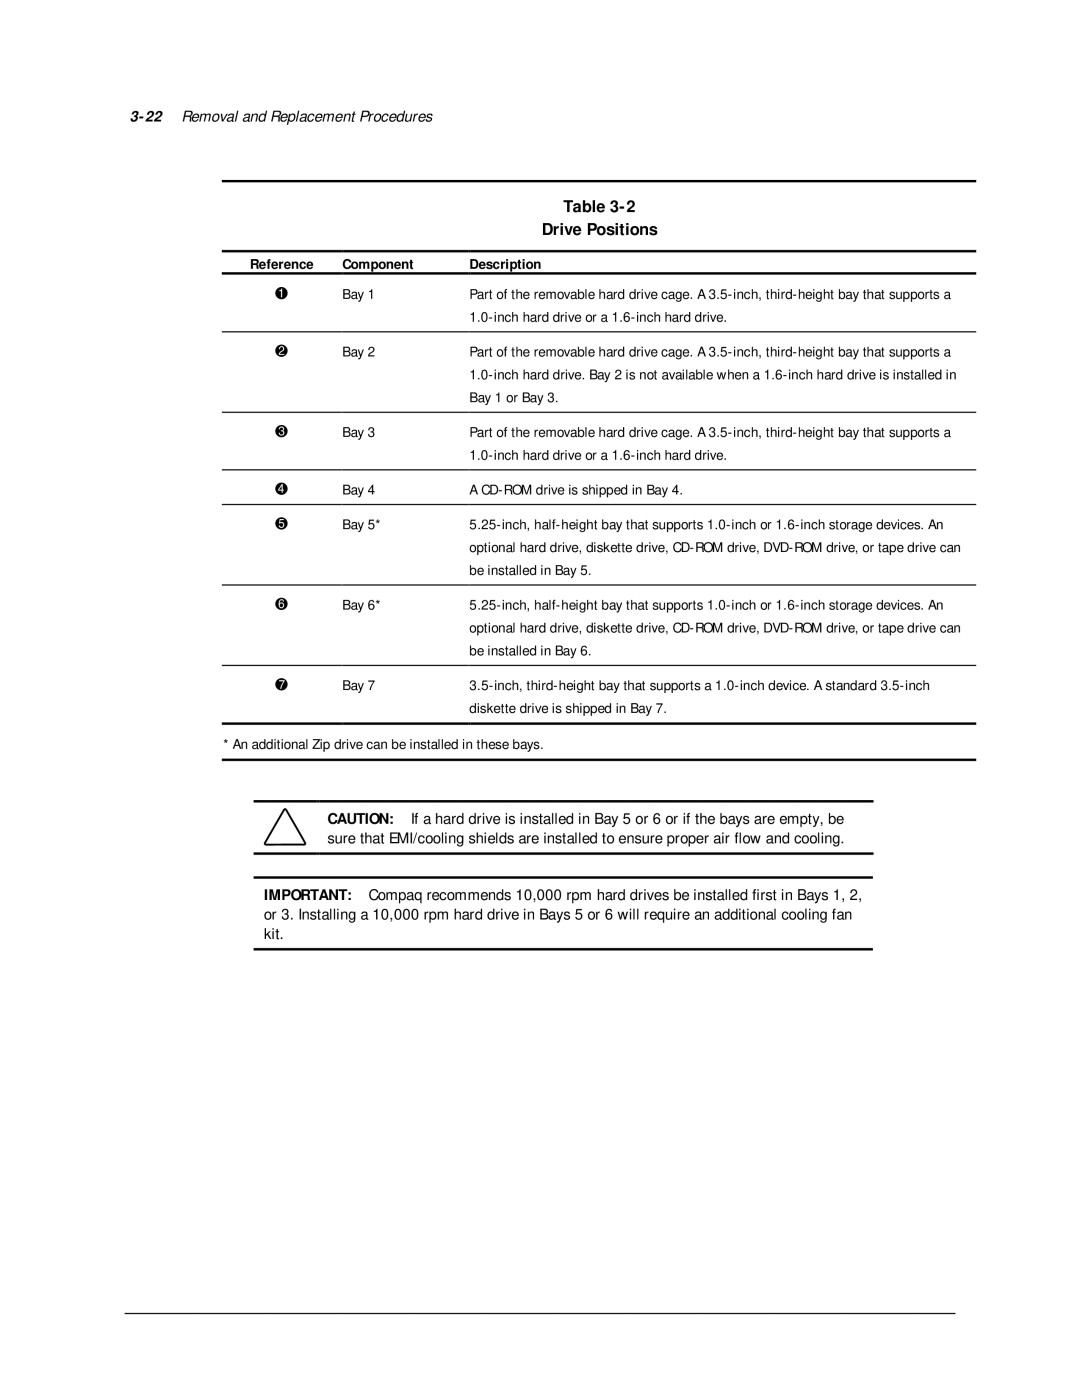 Compaq AP500 manual 22Removal and Replacement Procedures, Drive Positions, Component Description 